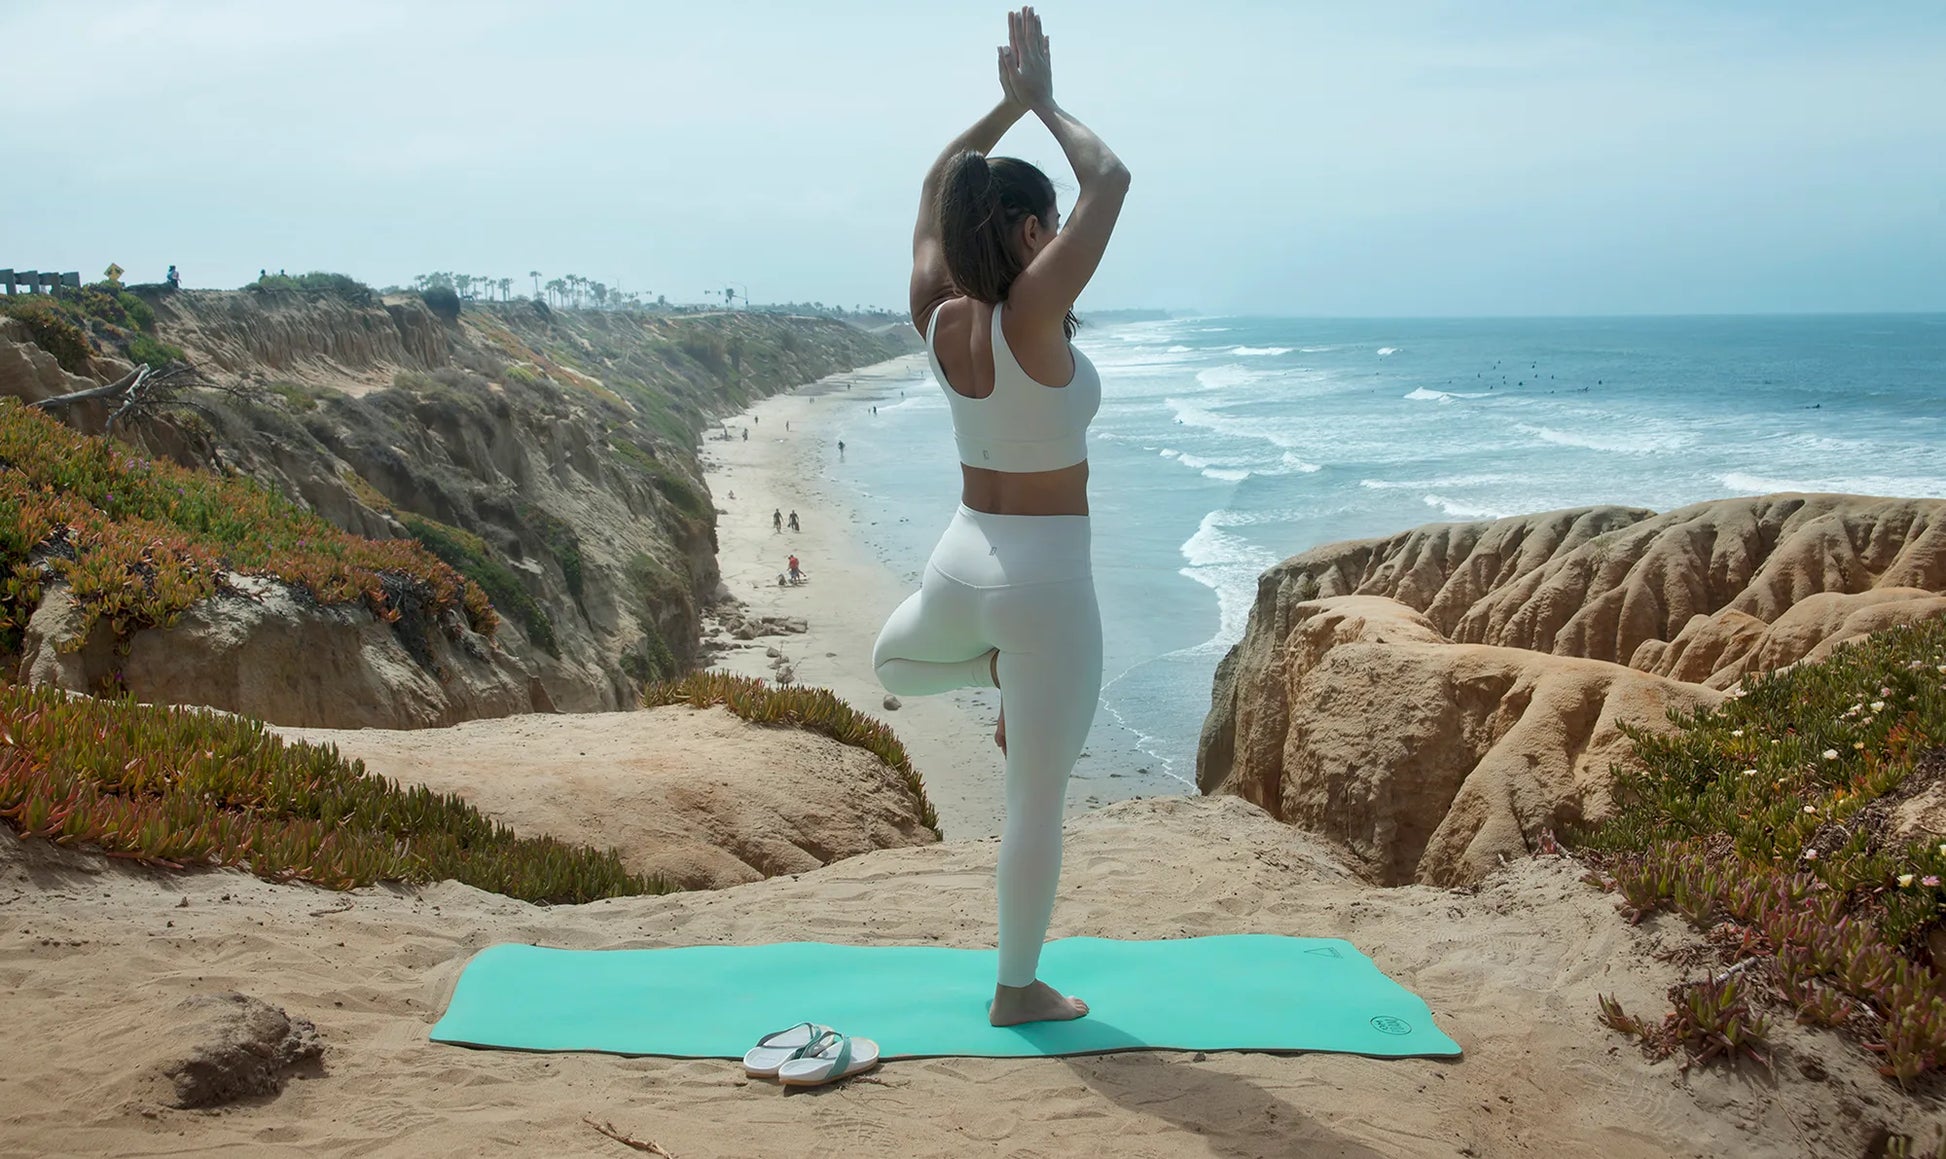 Woman doing a yoga pose on a teal yoga mat on a beach.